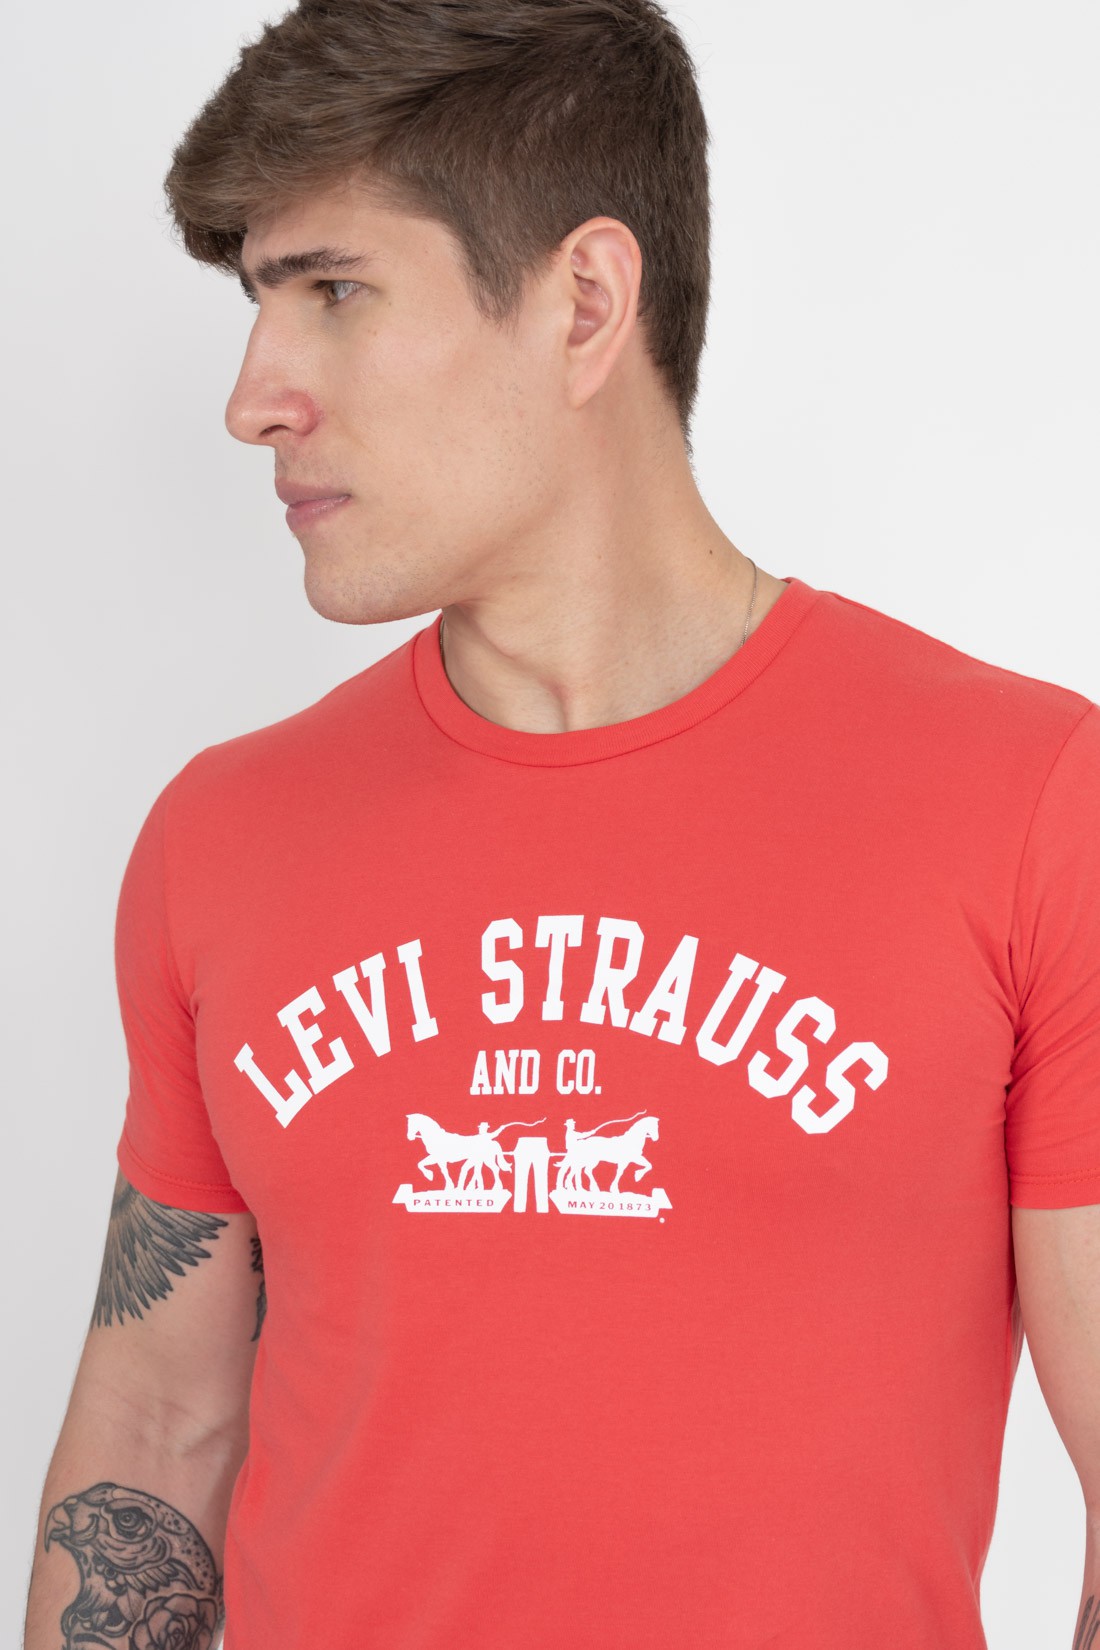 Camiseta Mc Levis Strauss